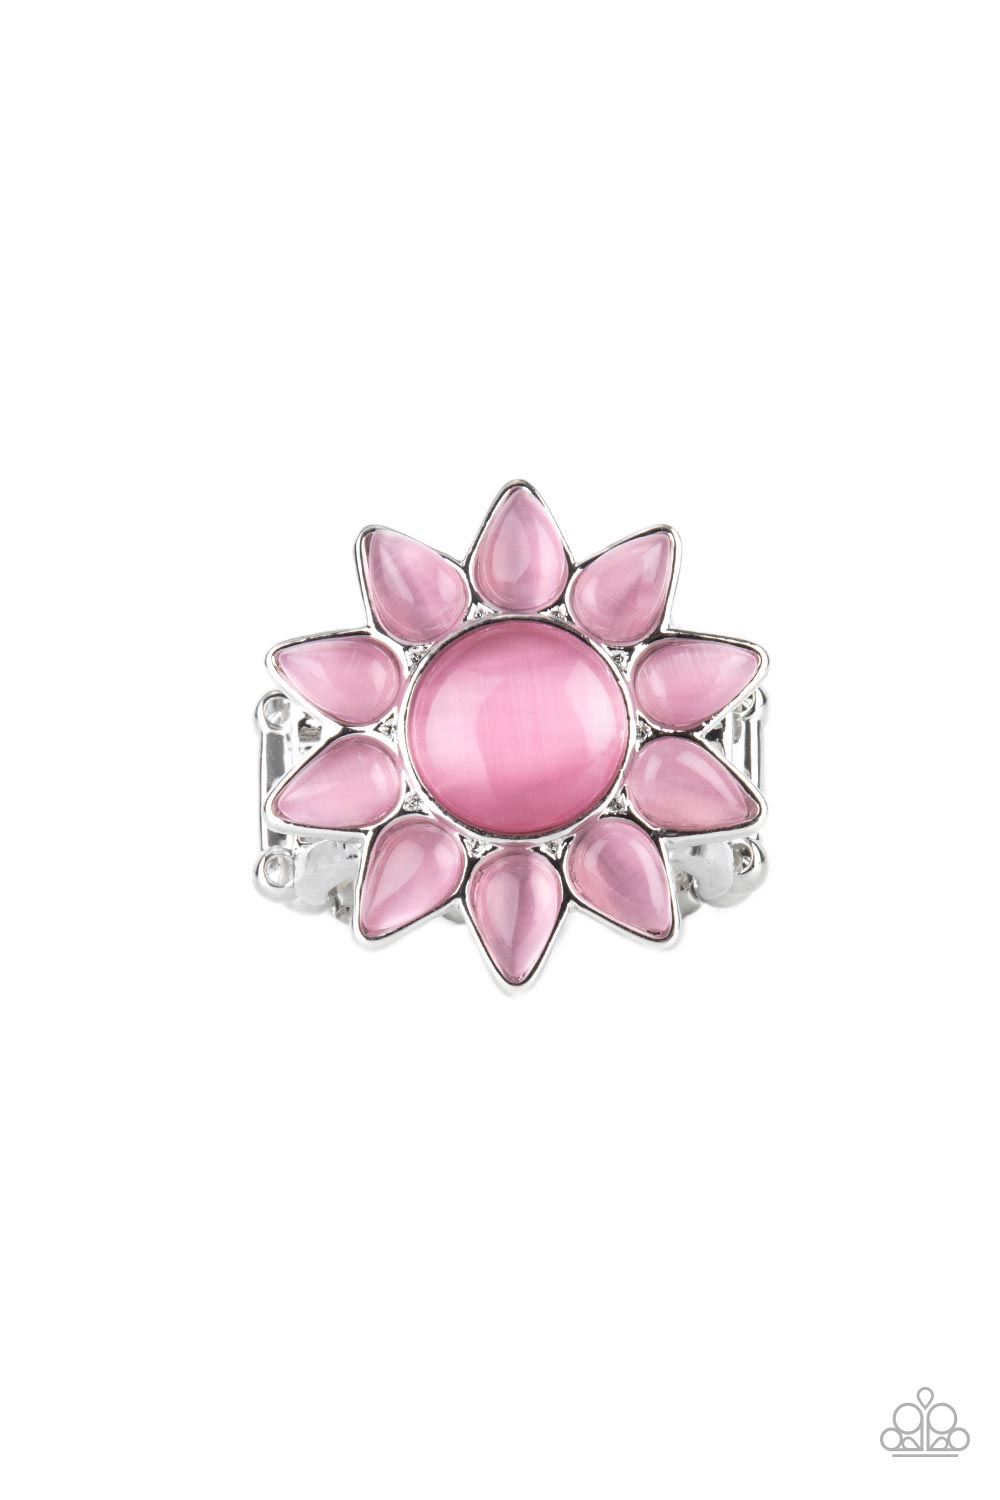 Ring - Blossoming Sunbeams - Pink